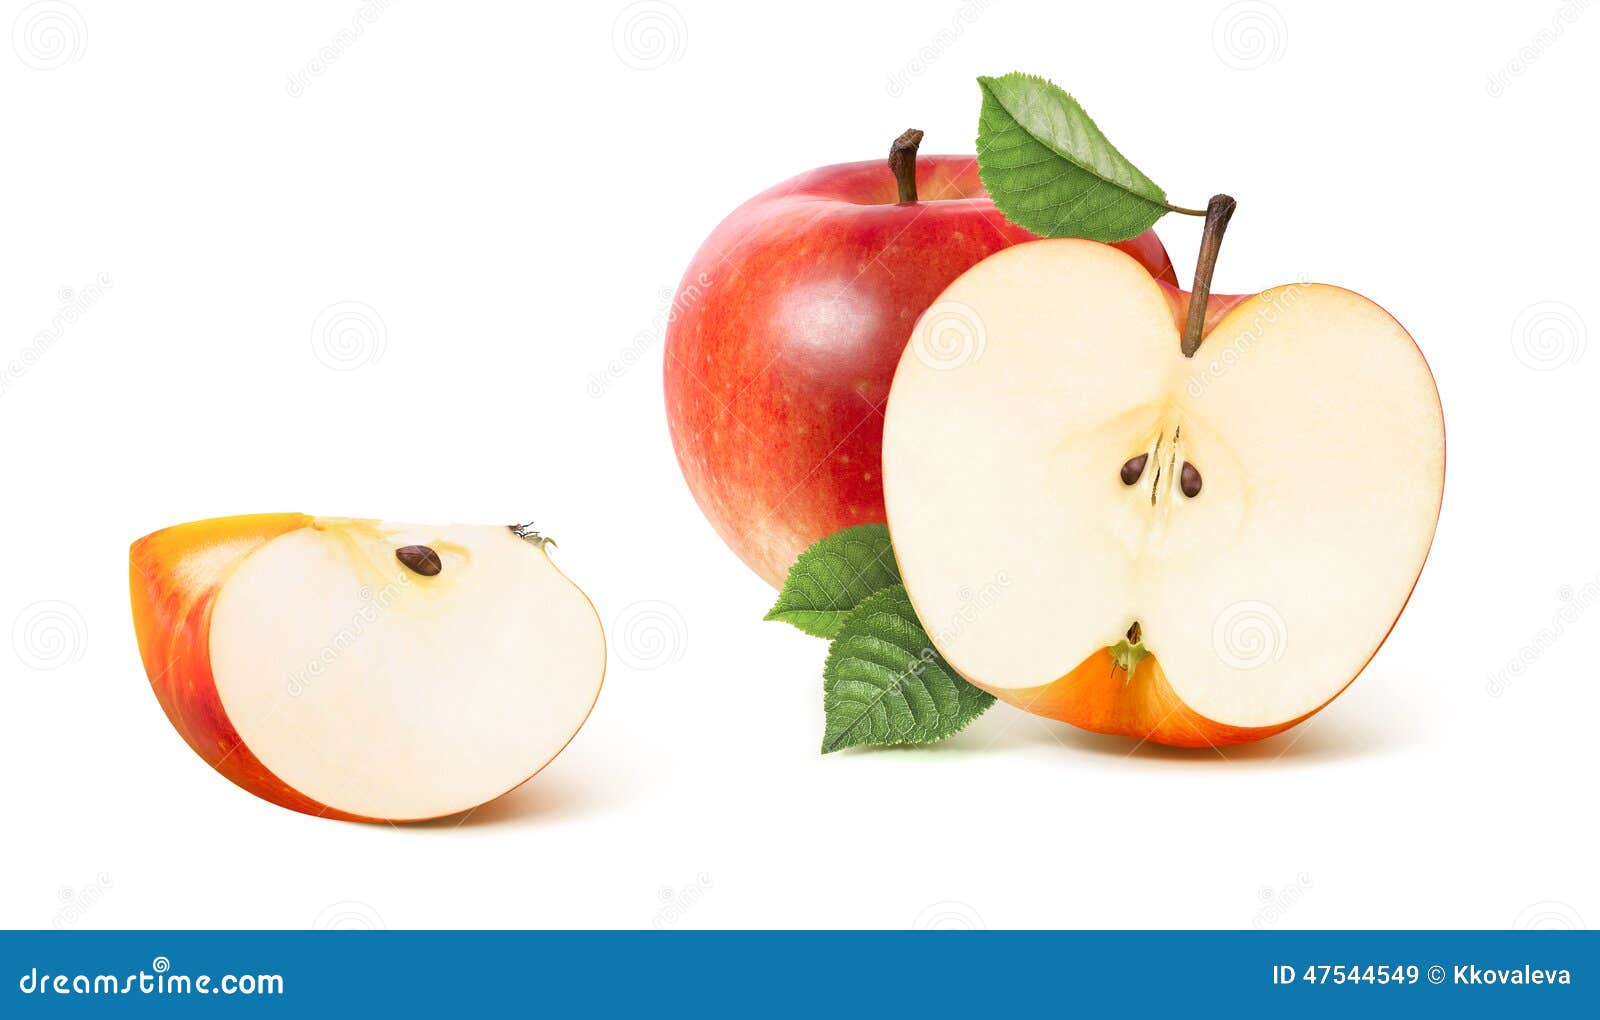 Две трети яблока. Яблоко в разрезе. Разрезанное яблоко на белом фоне. Красное яблоко в разрезе. Долька яблока.